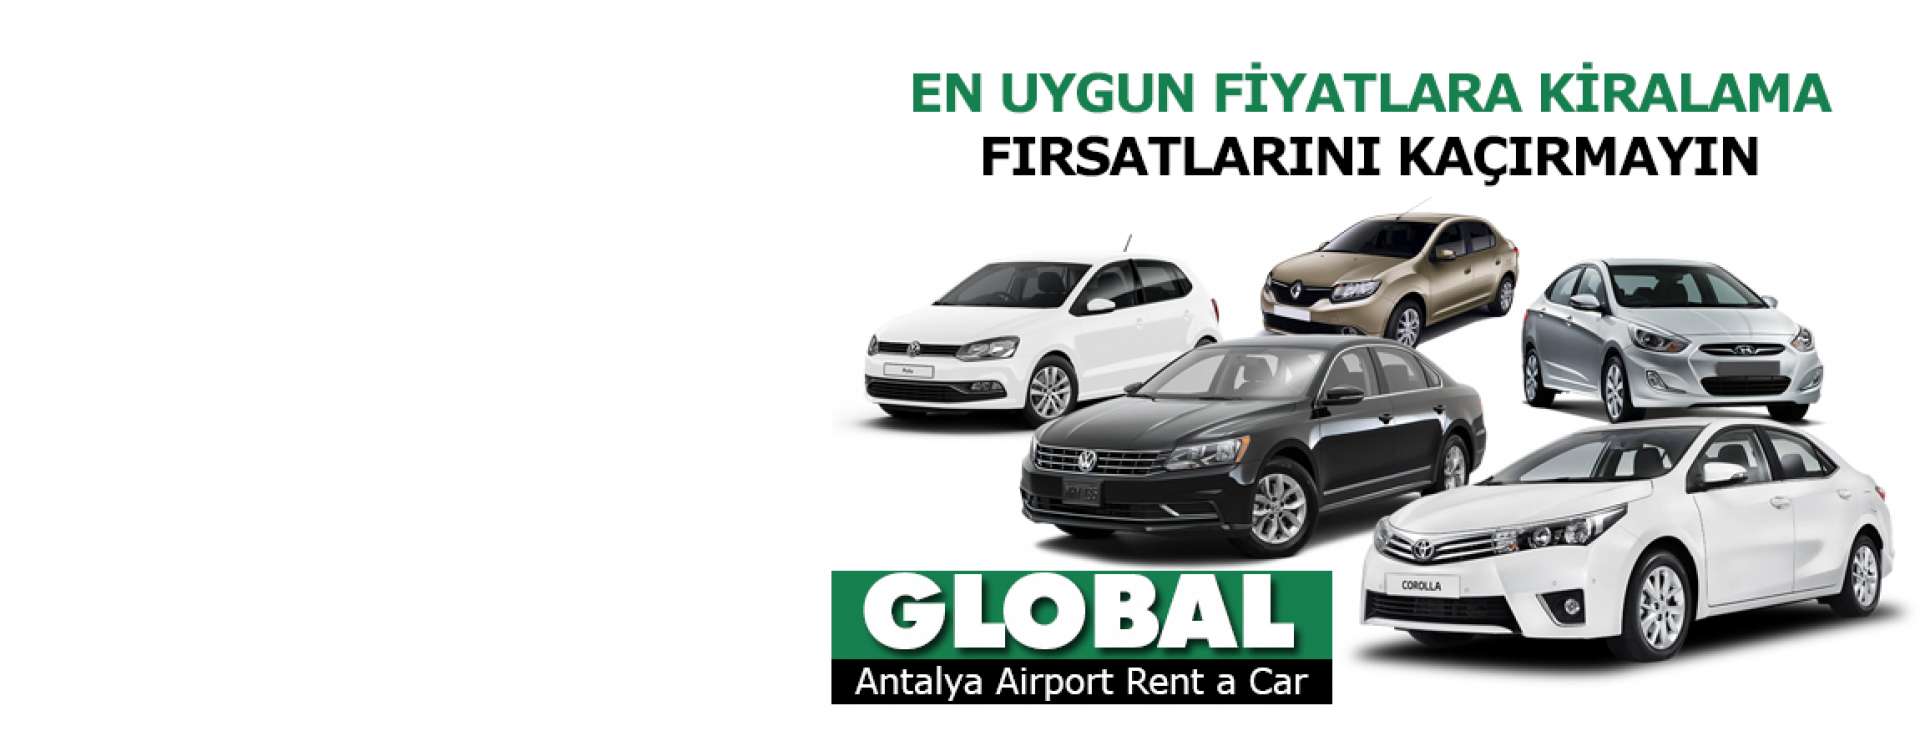 antalya airport rent a car